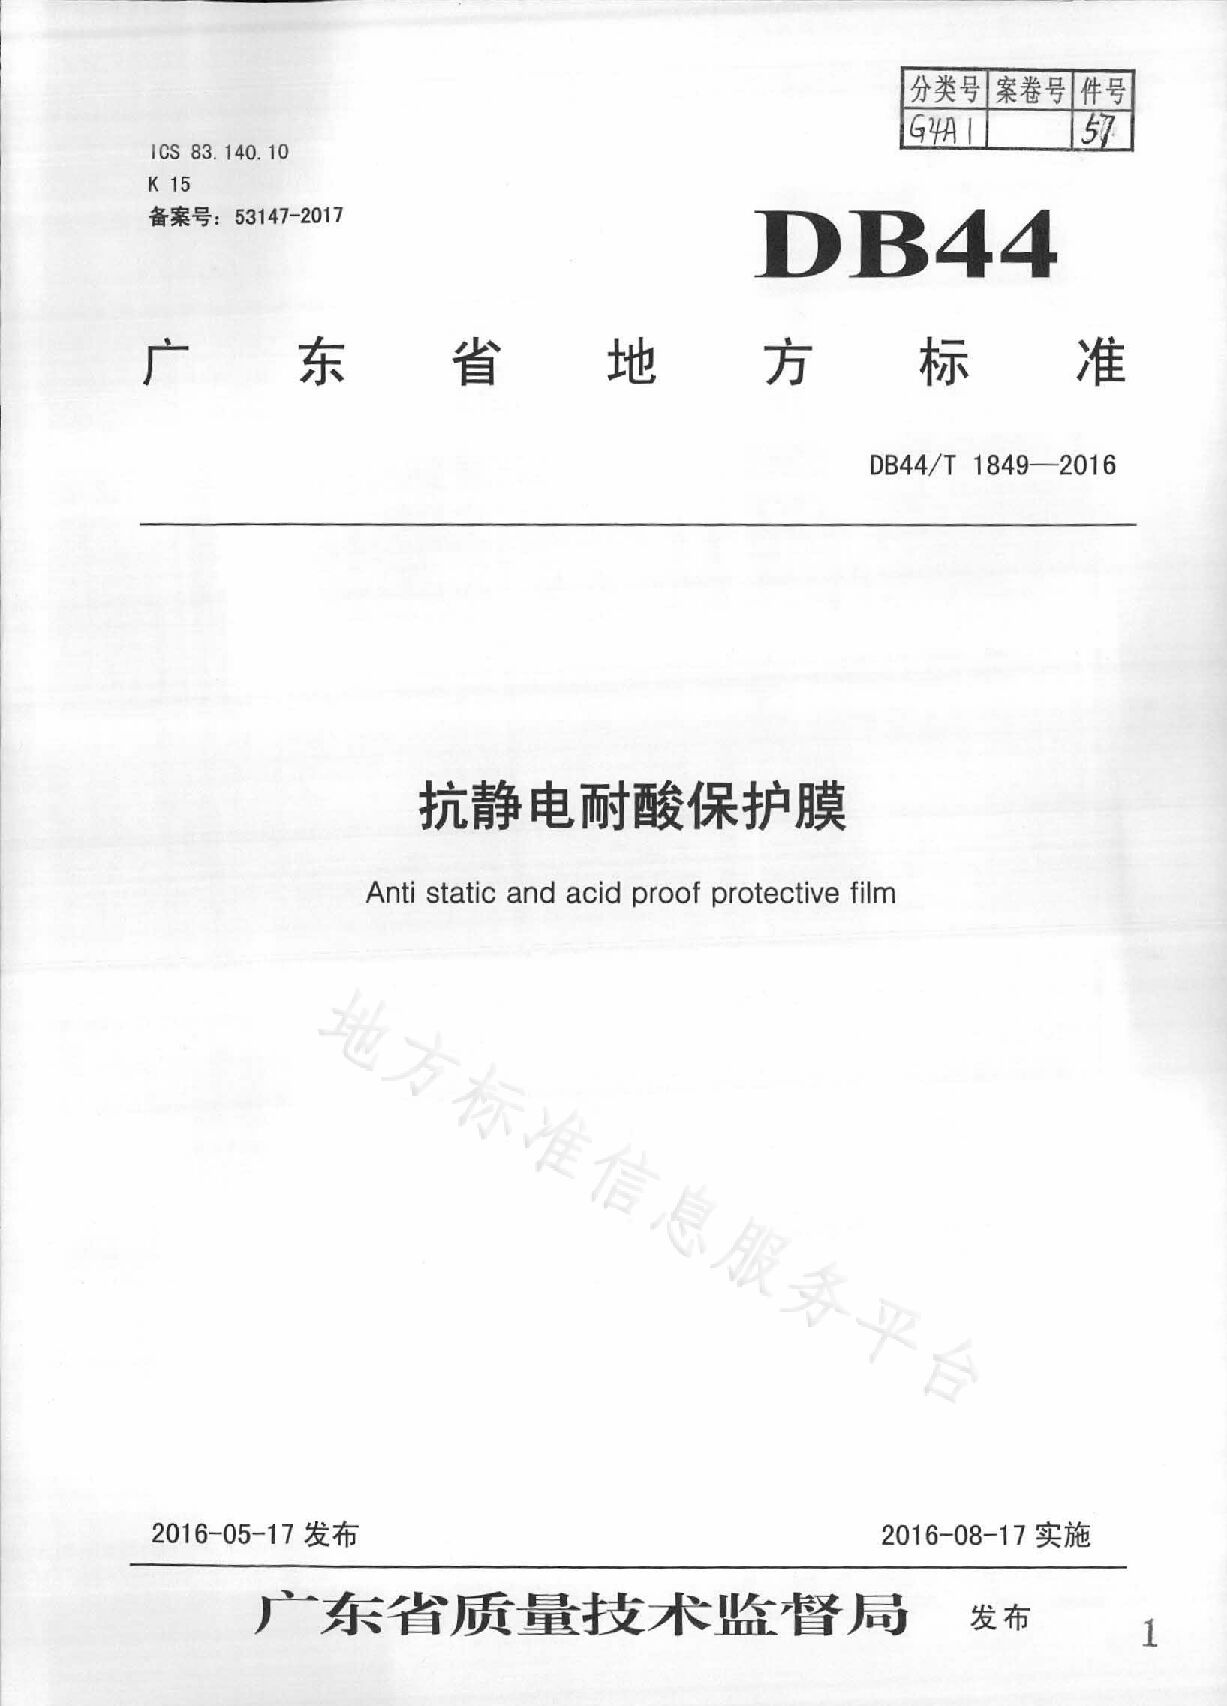 DB44/T 1849-2016